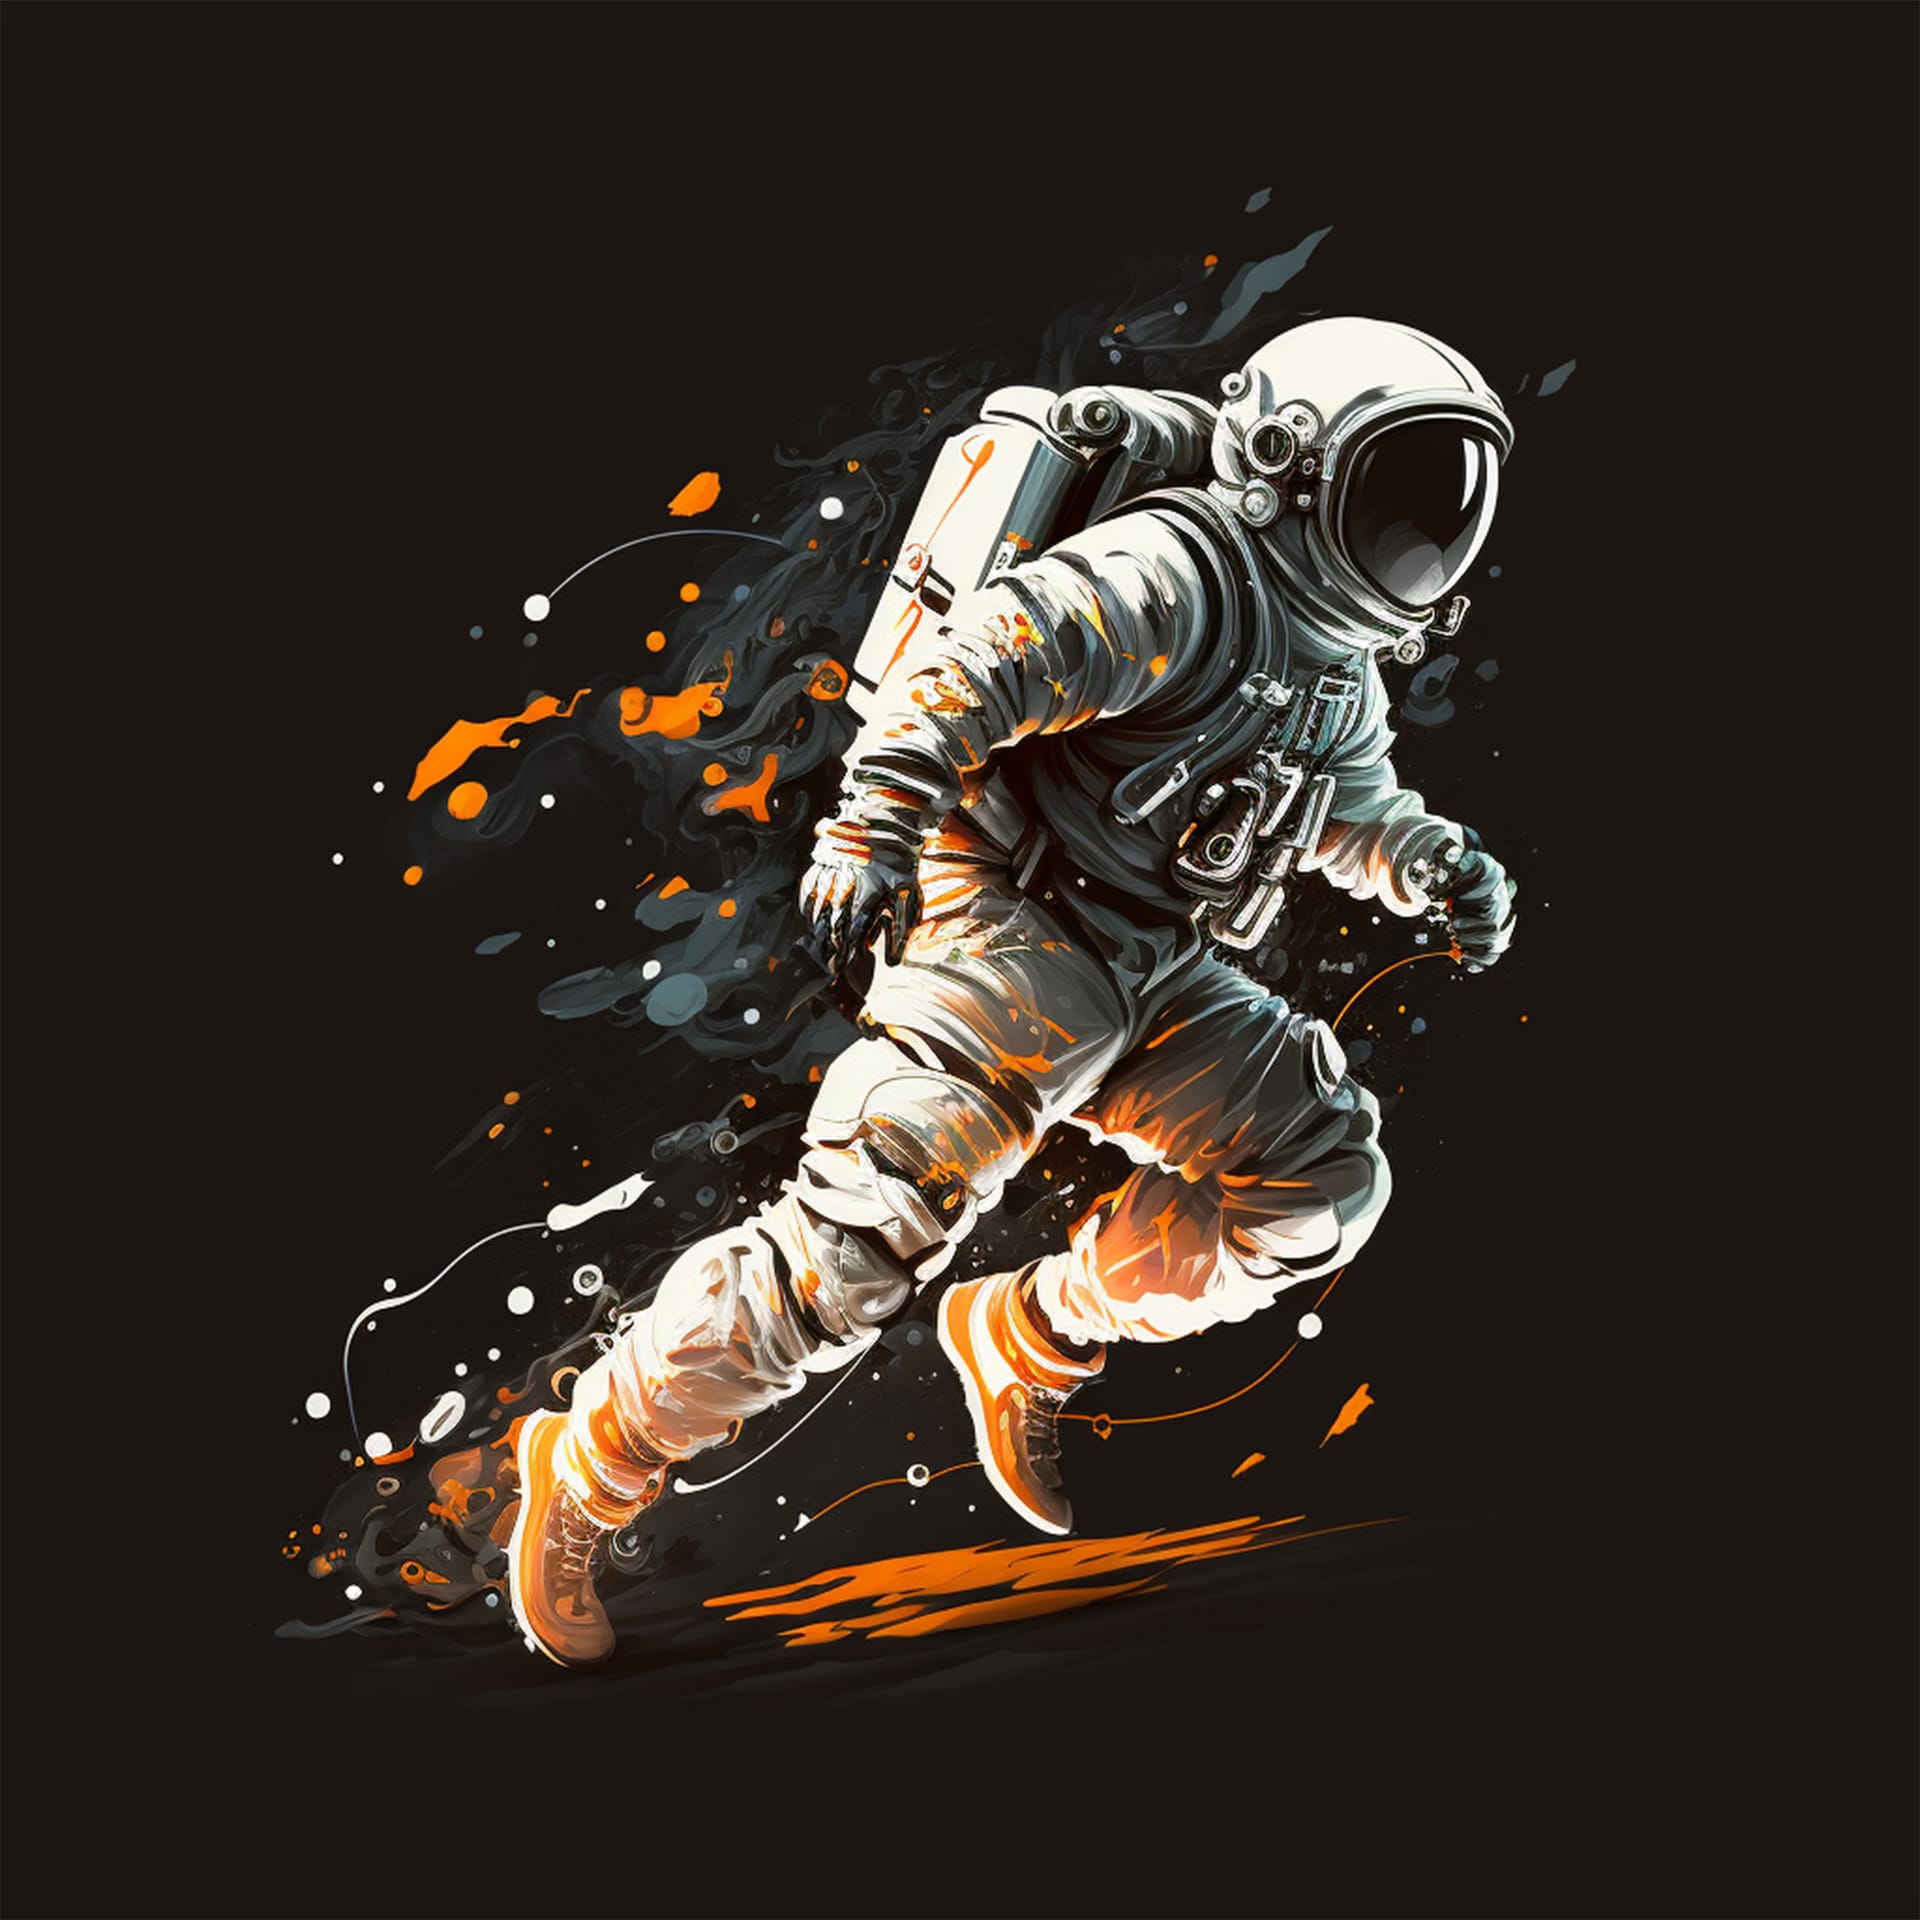 Astronaut digital art retro assets isolated black background nice image